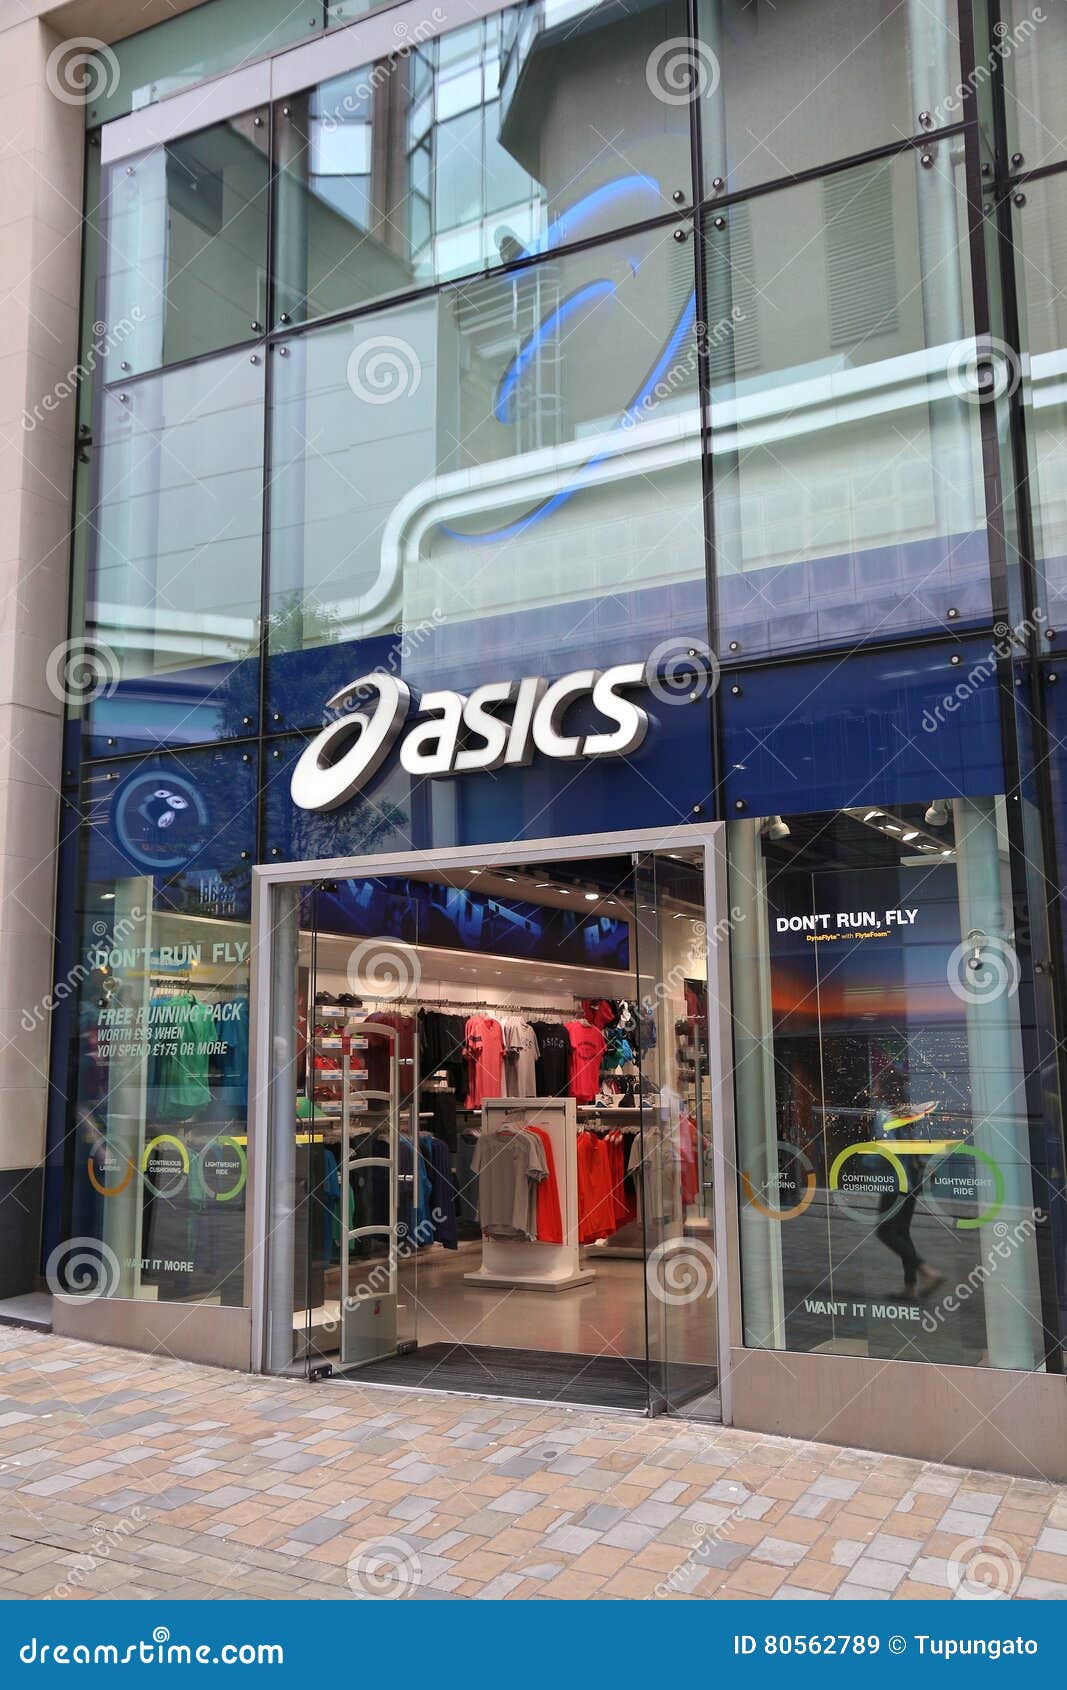 asics stores uk